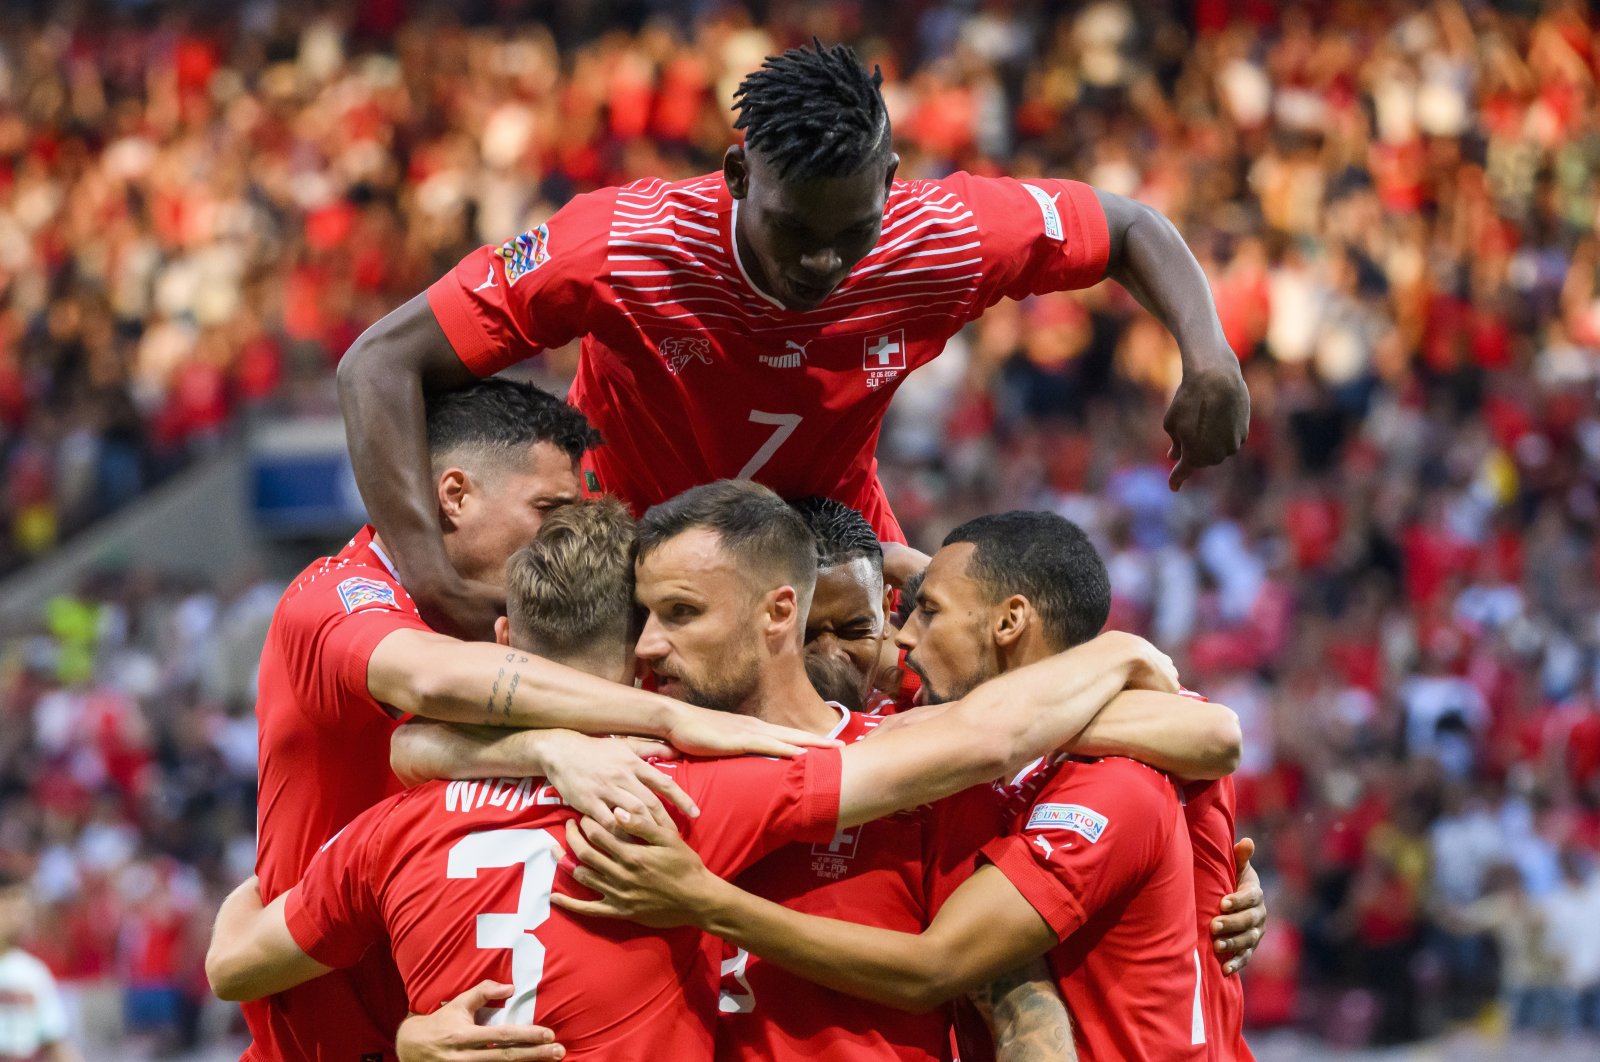 Switzerland players celebrate a goal in a UEFA Nations League match against Portugal, Geneva, Switzerland, June 12, 2022. (AP Photo)